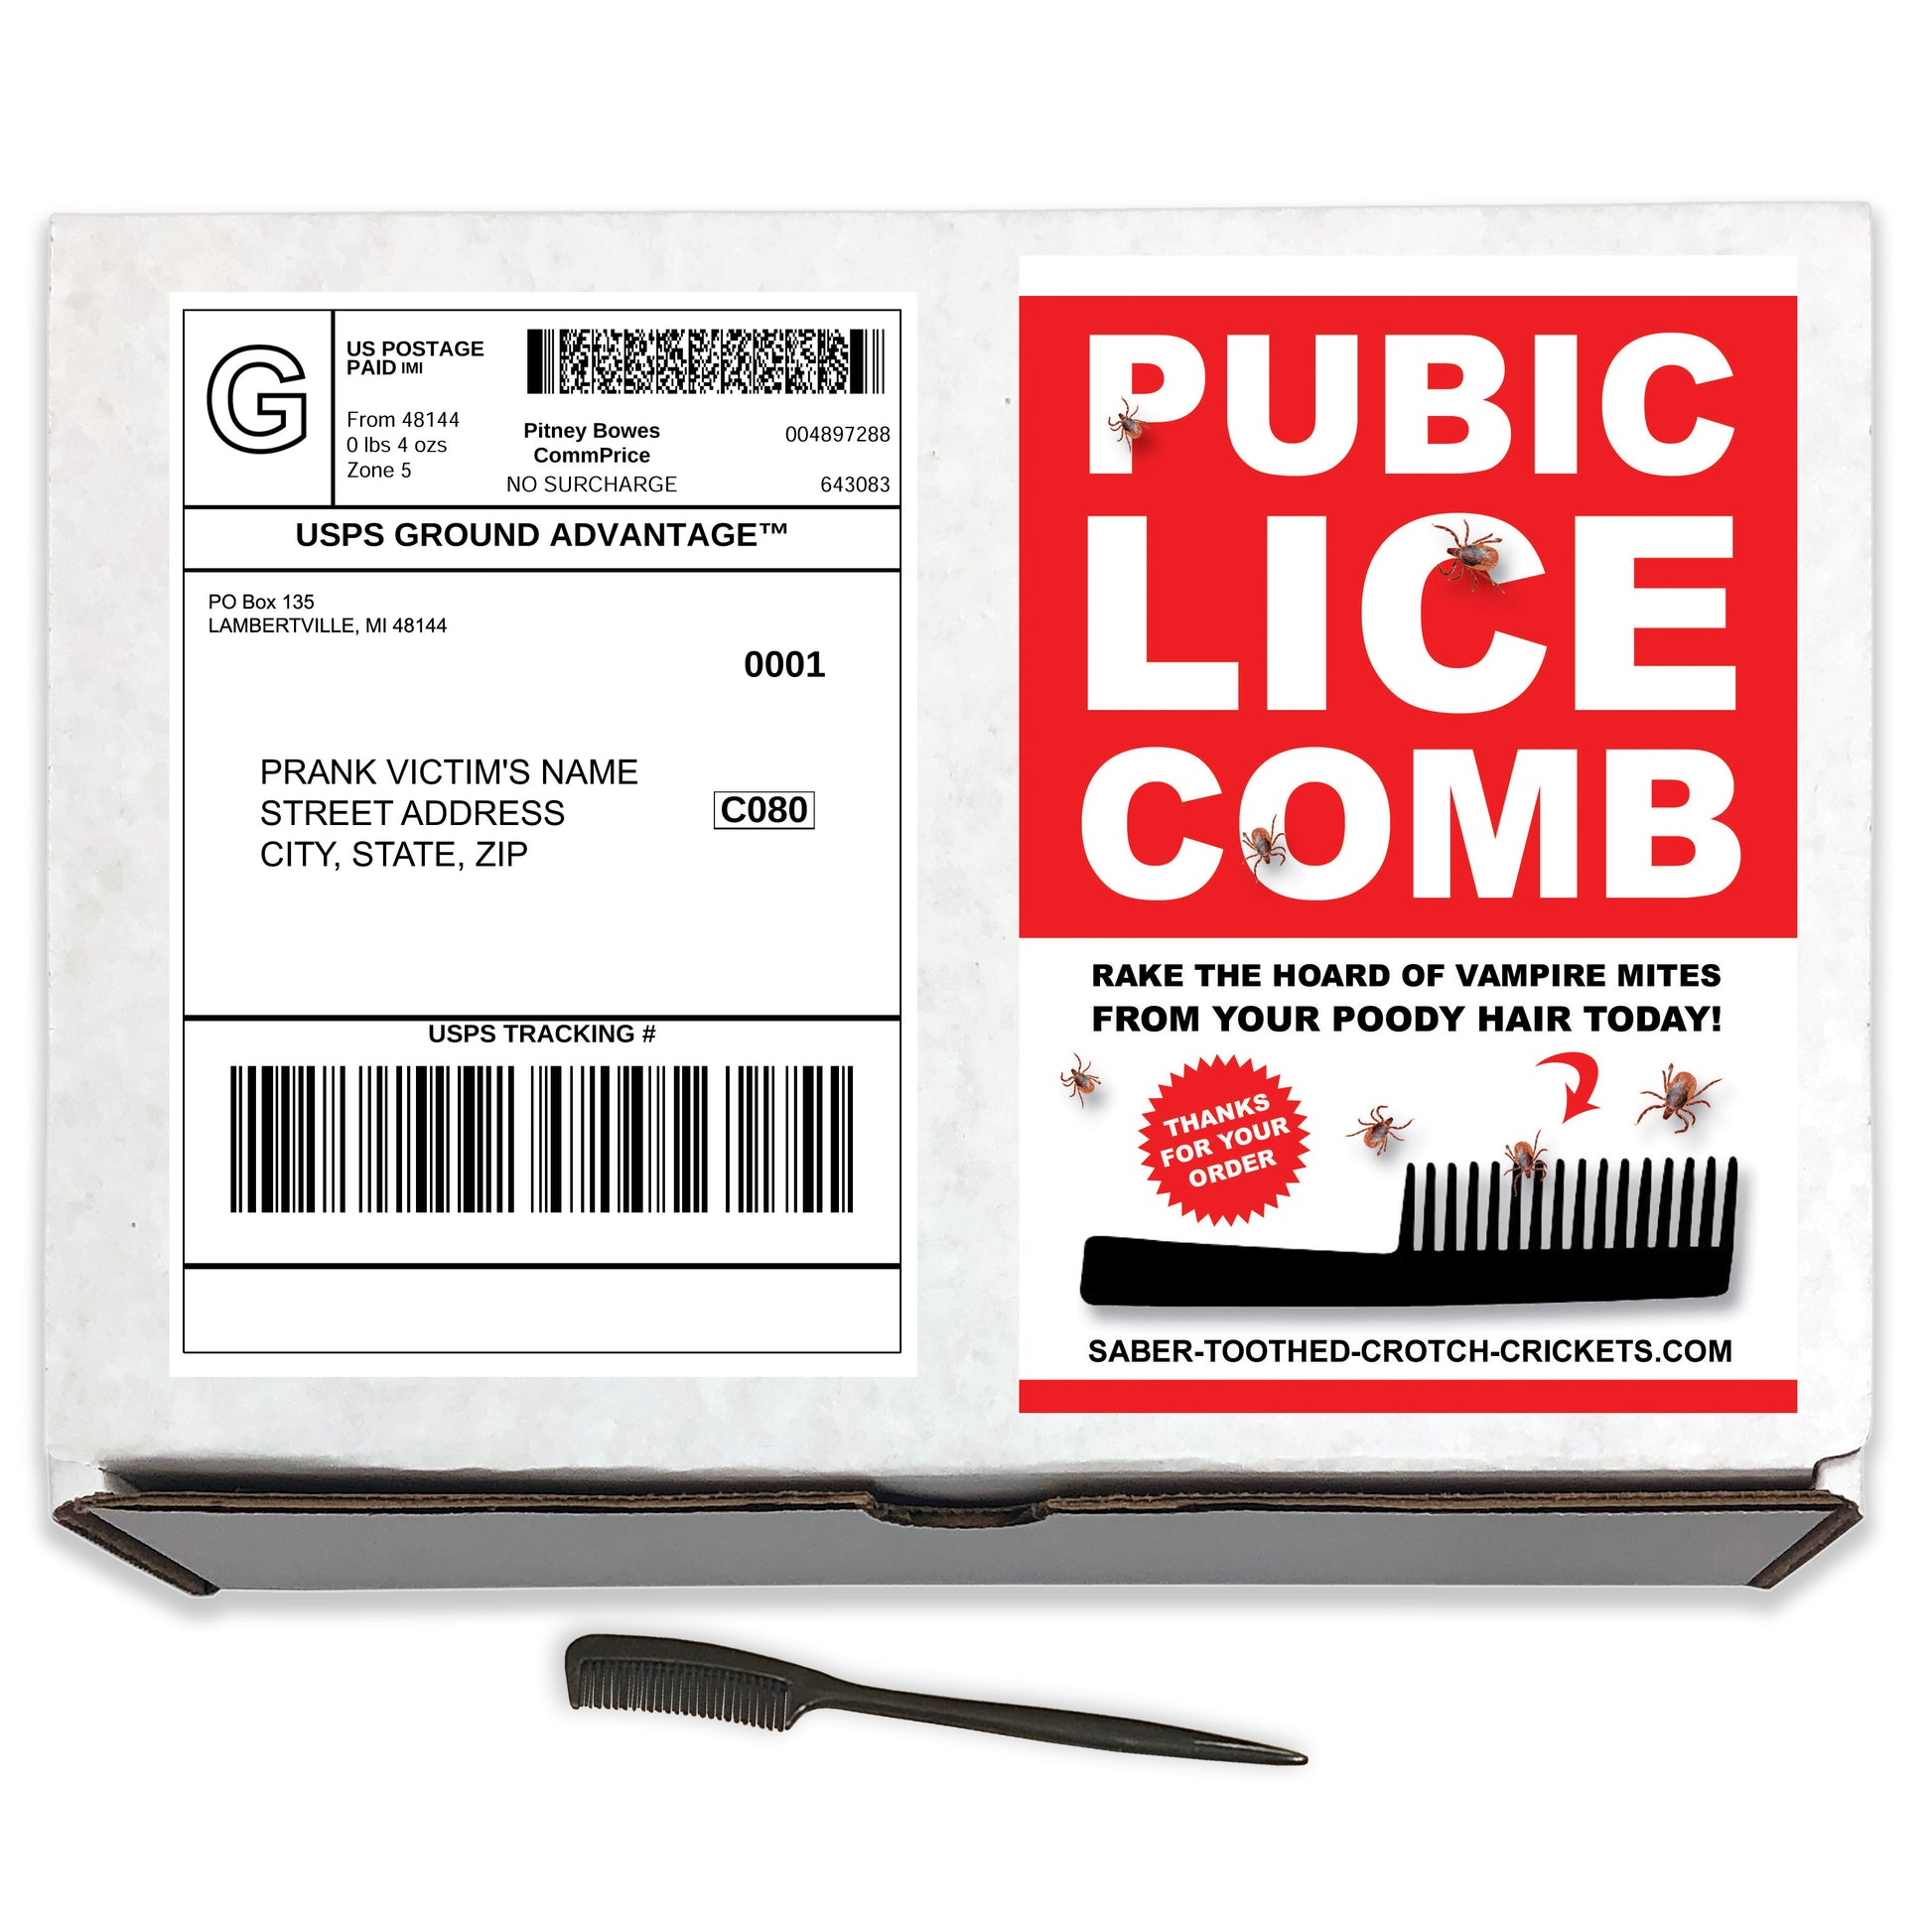 Pubic Lice Comb Prank Mail